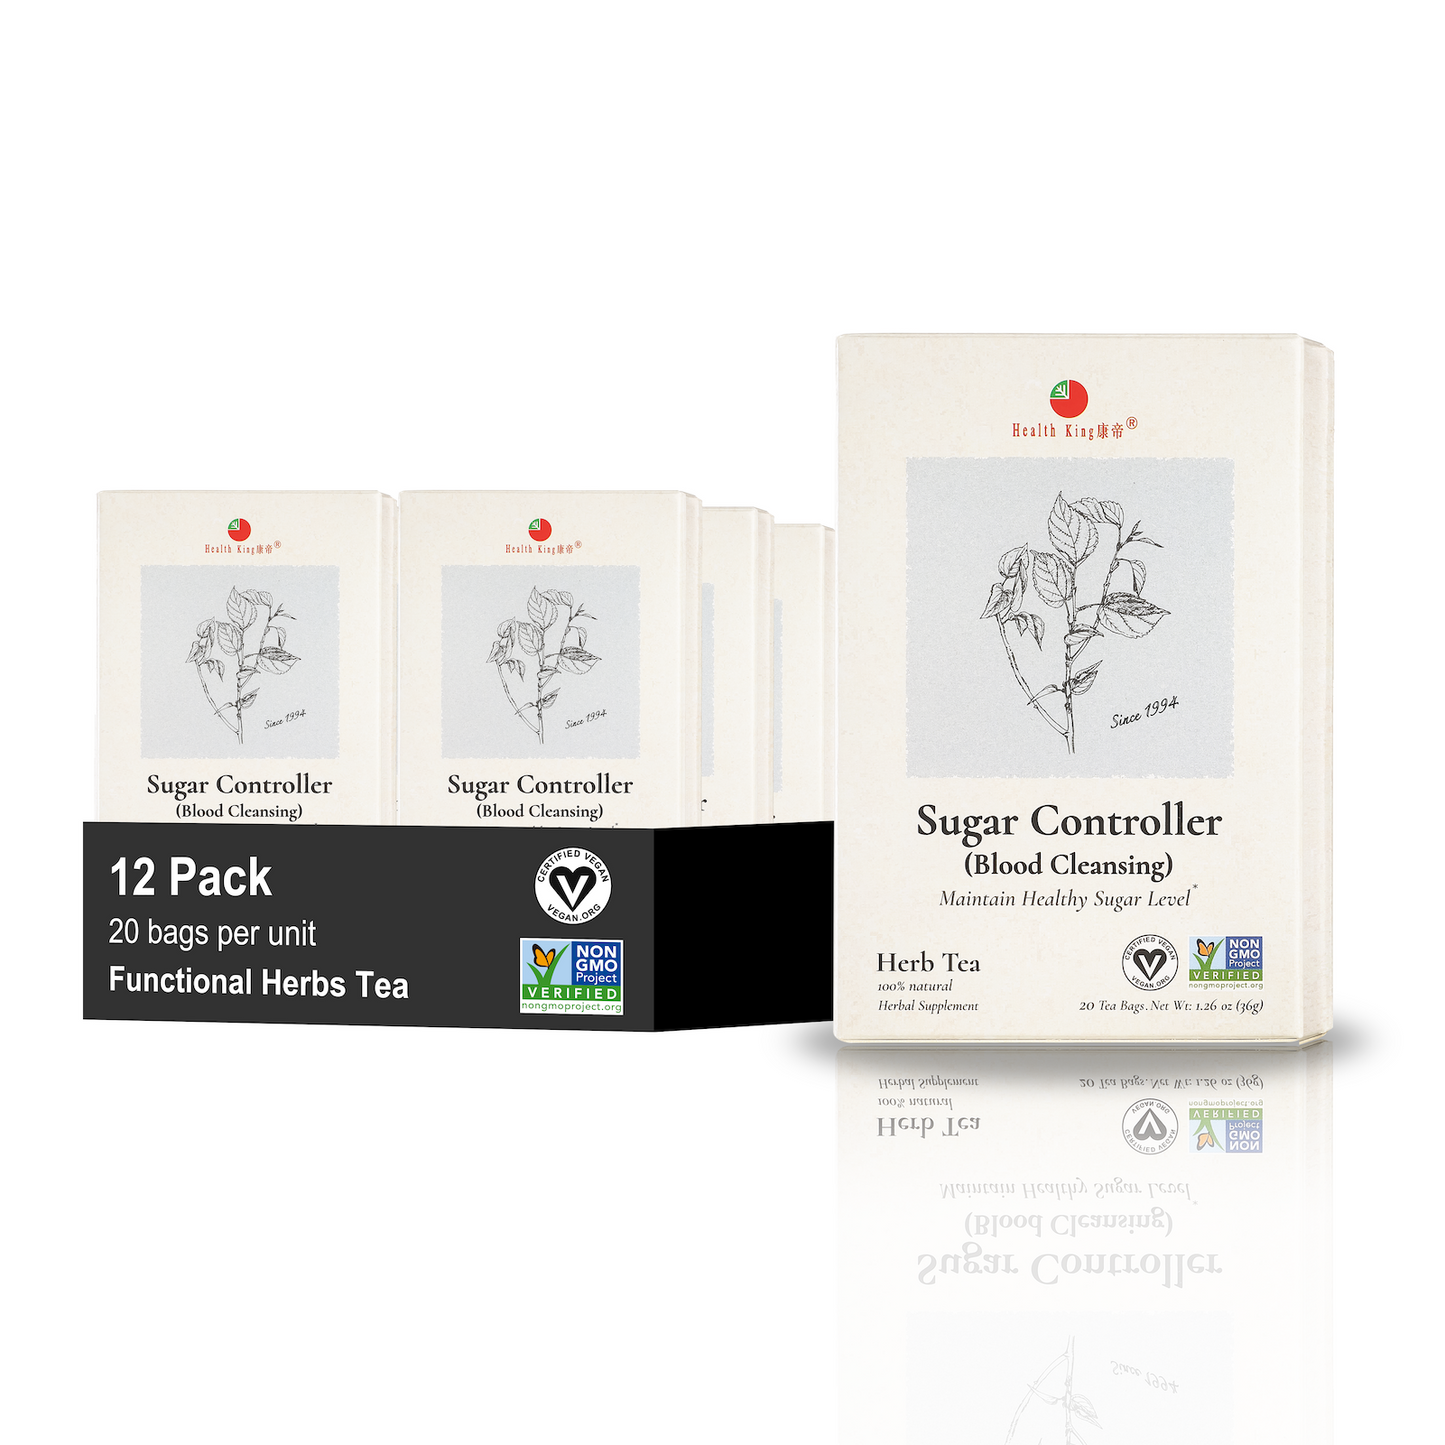 Twelve-pack of Sugar Controller organic herbal tea to support sugar balance